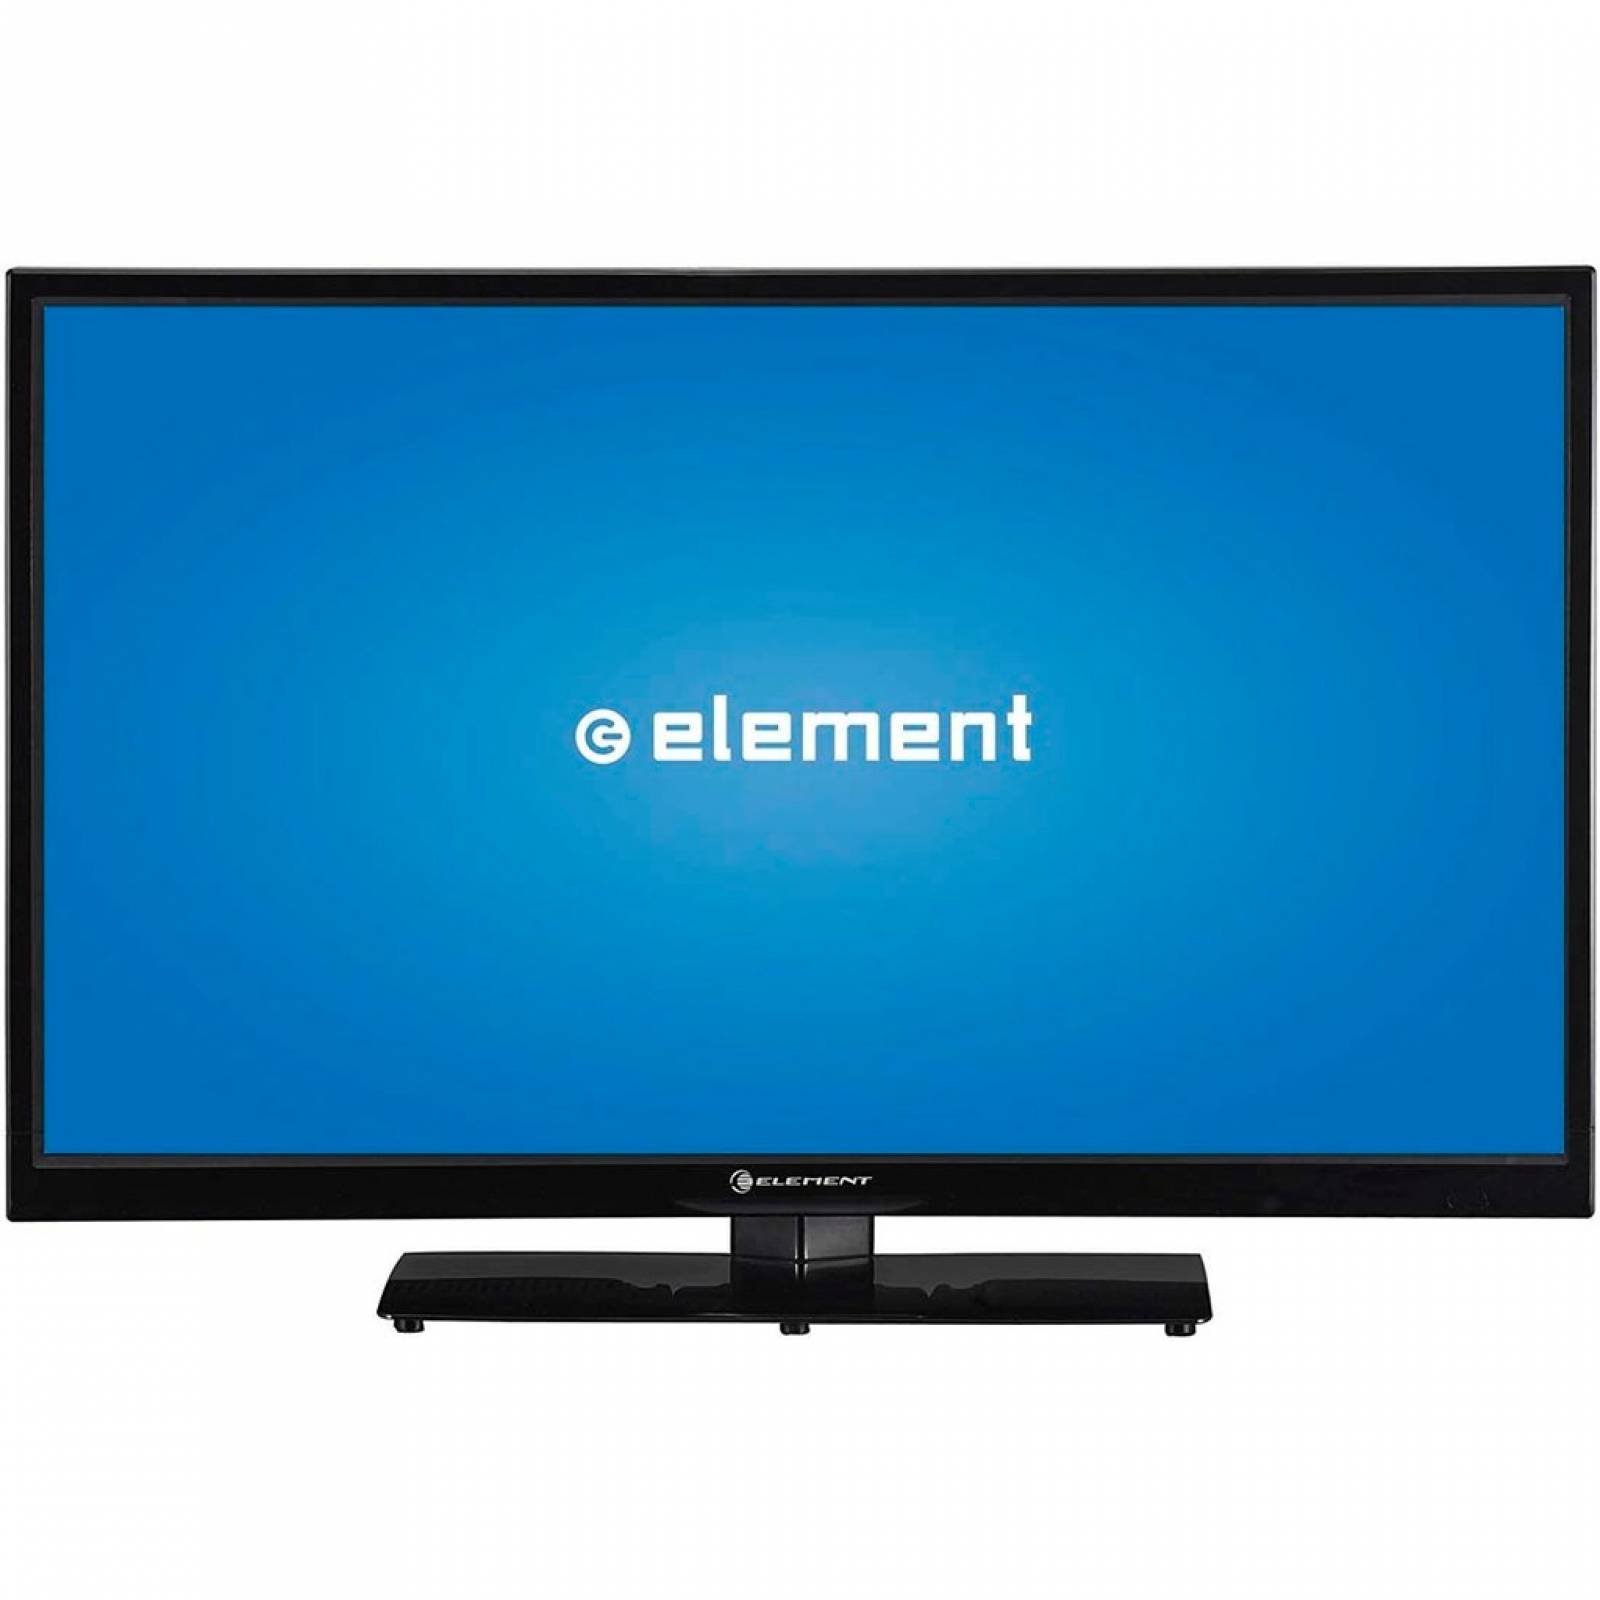 Pantalla Tv Element 32" LED 720P 60Hz Reacondicionado